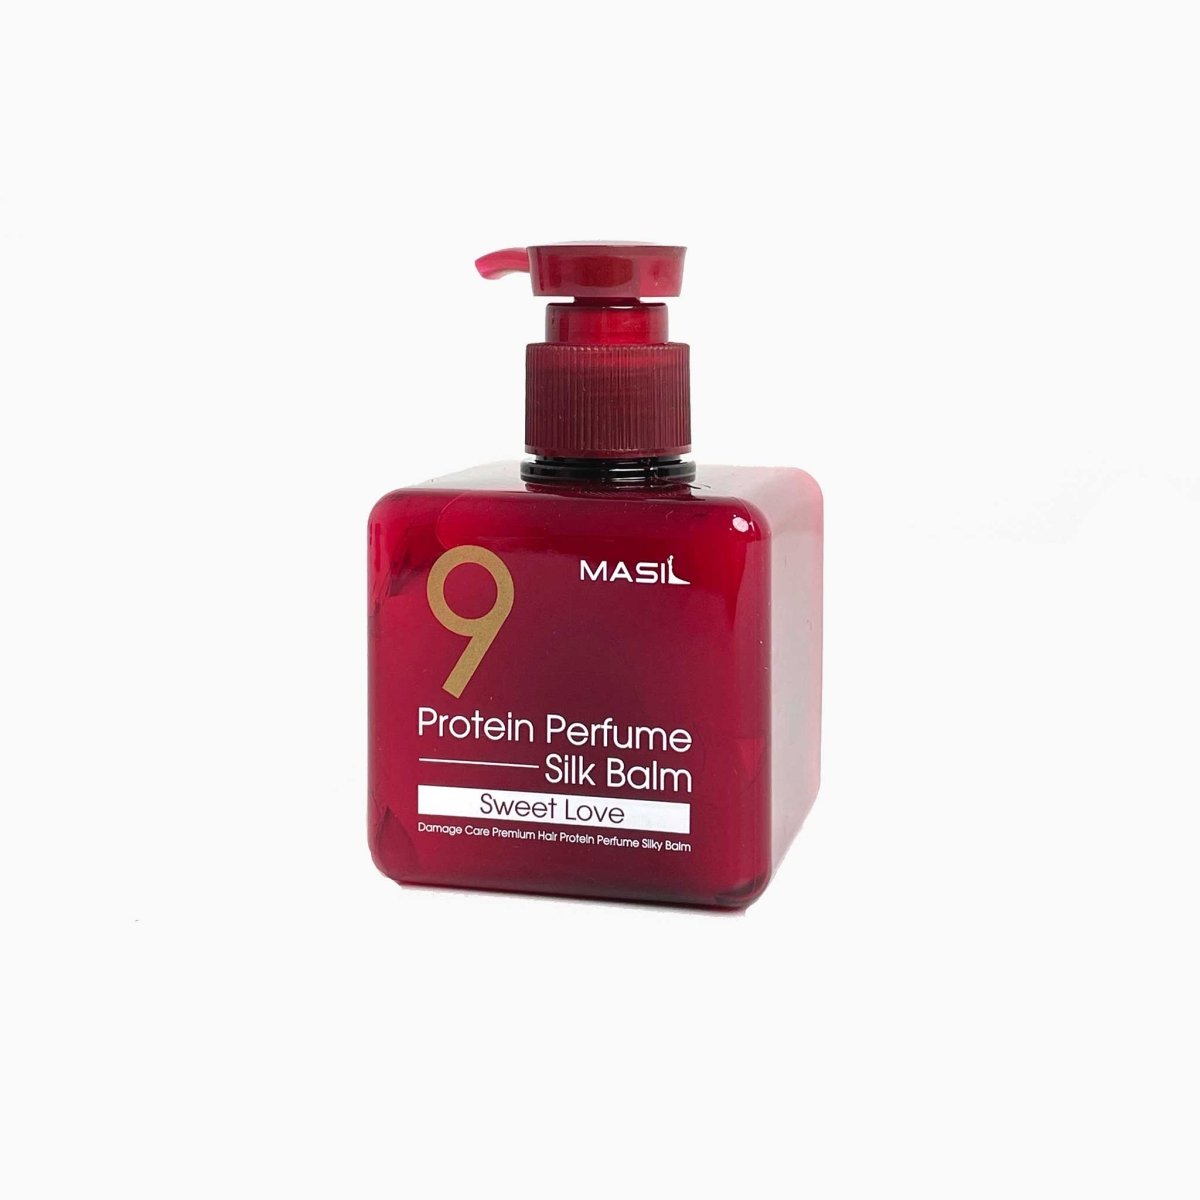 MASIL - 9 Protein Perfume Silk Balm (Sweet Love) - Stellar K-Beauty